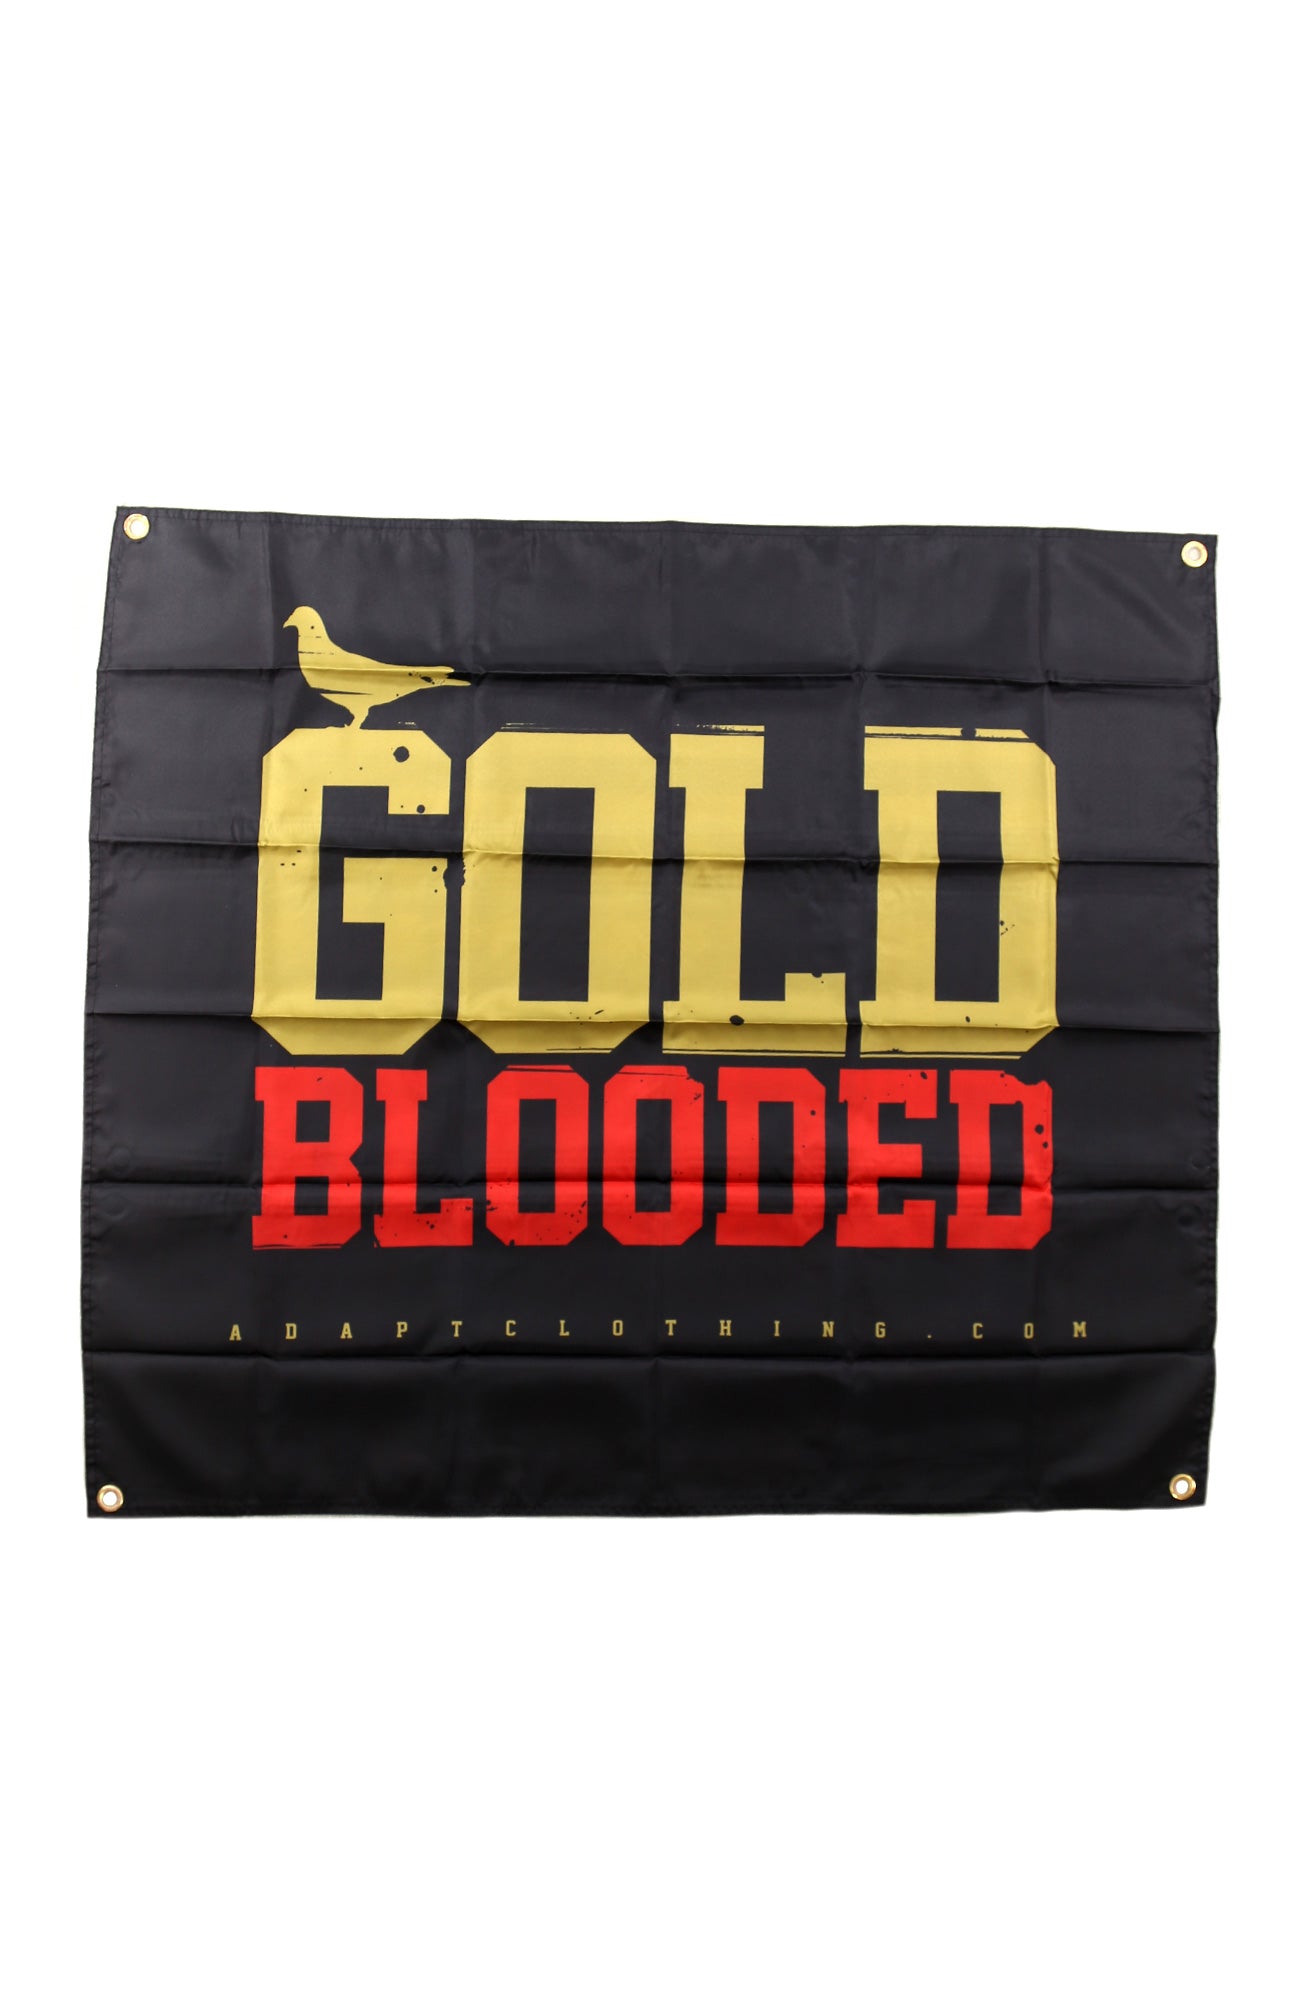 Gold Blooded (Black/Red Banner)